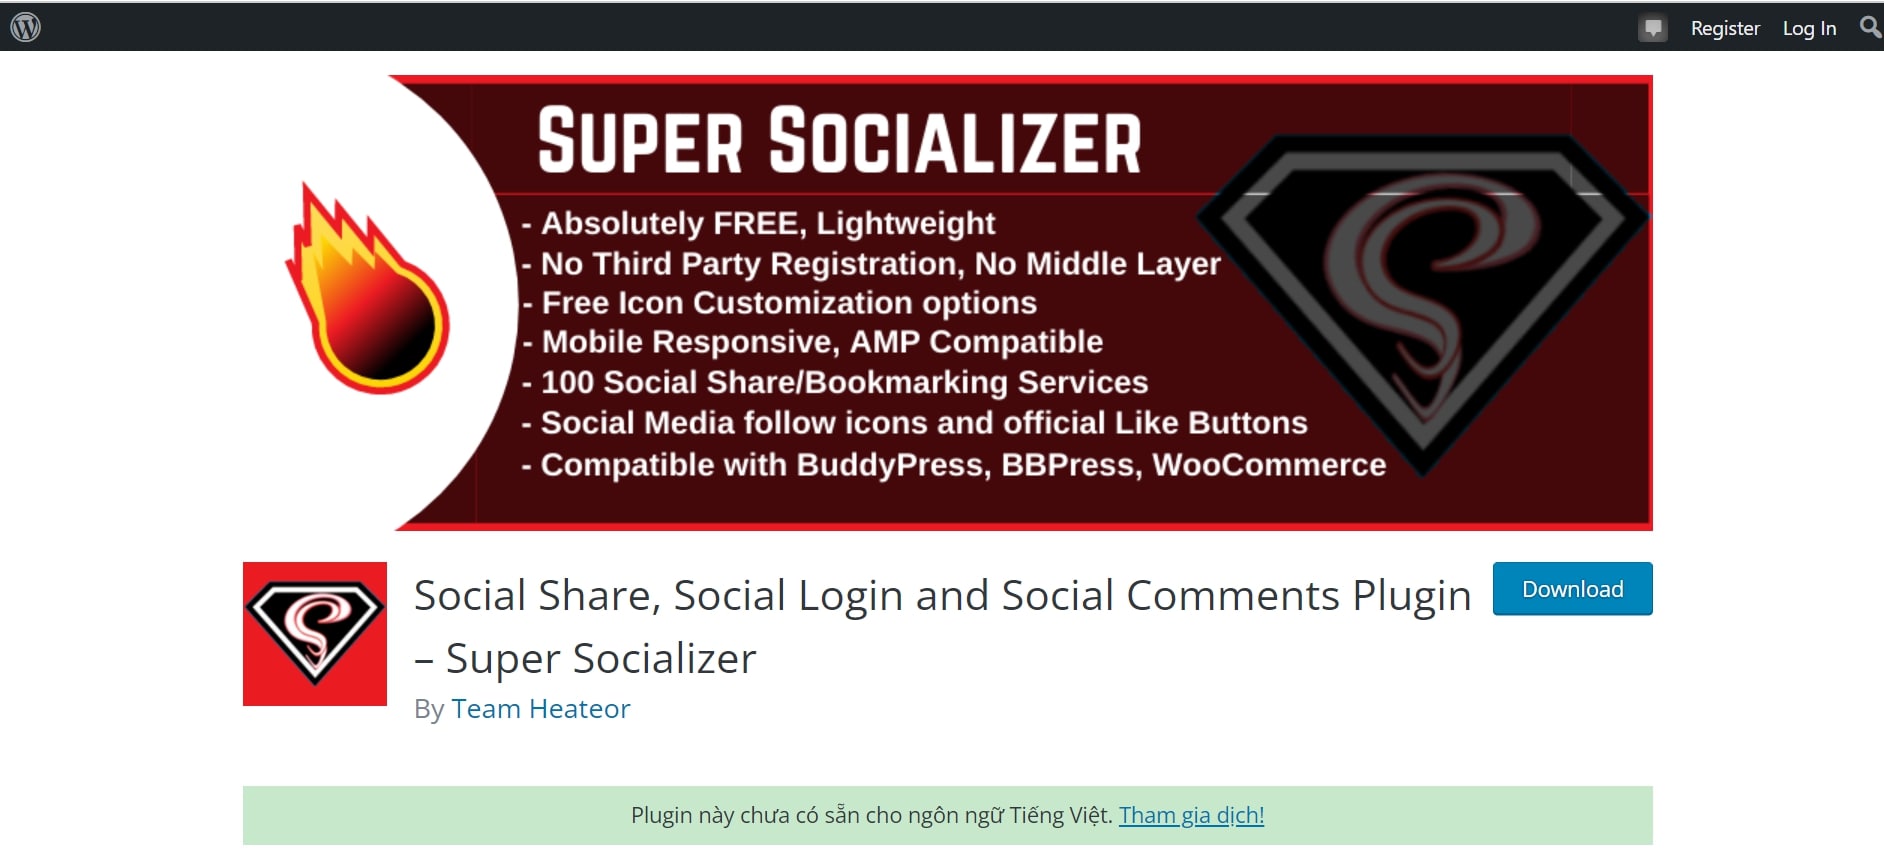 WordPress Social Share, Social Login, and Social Comments Plugin